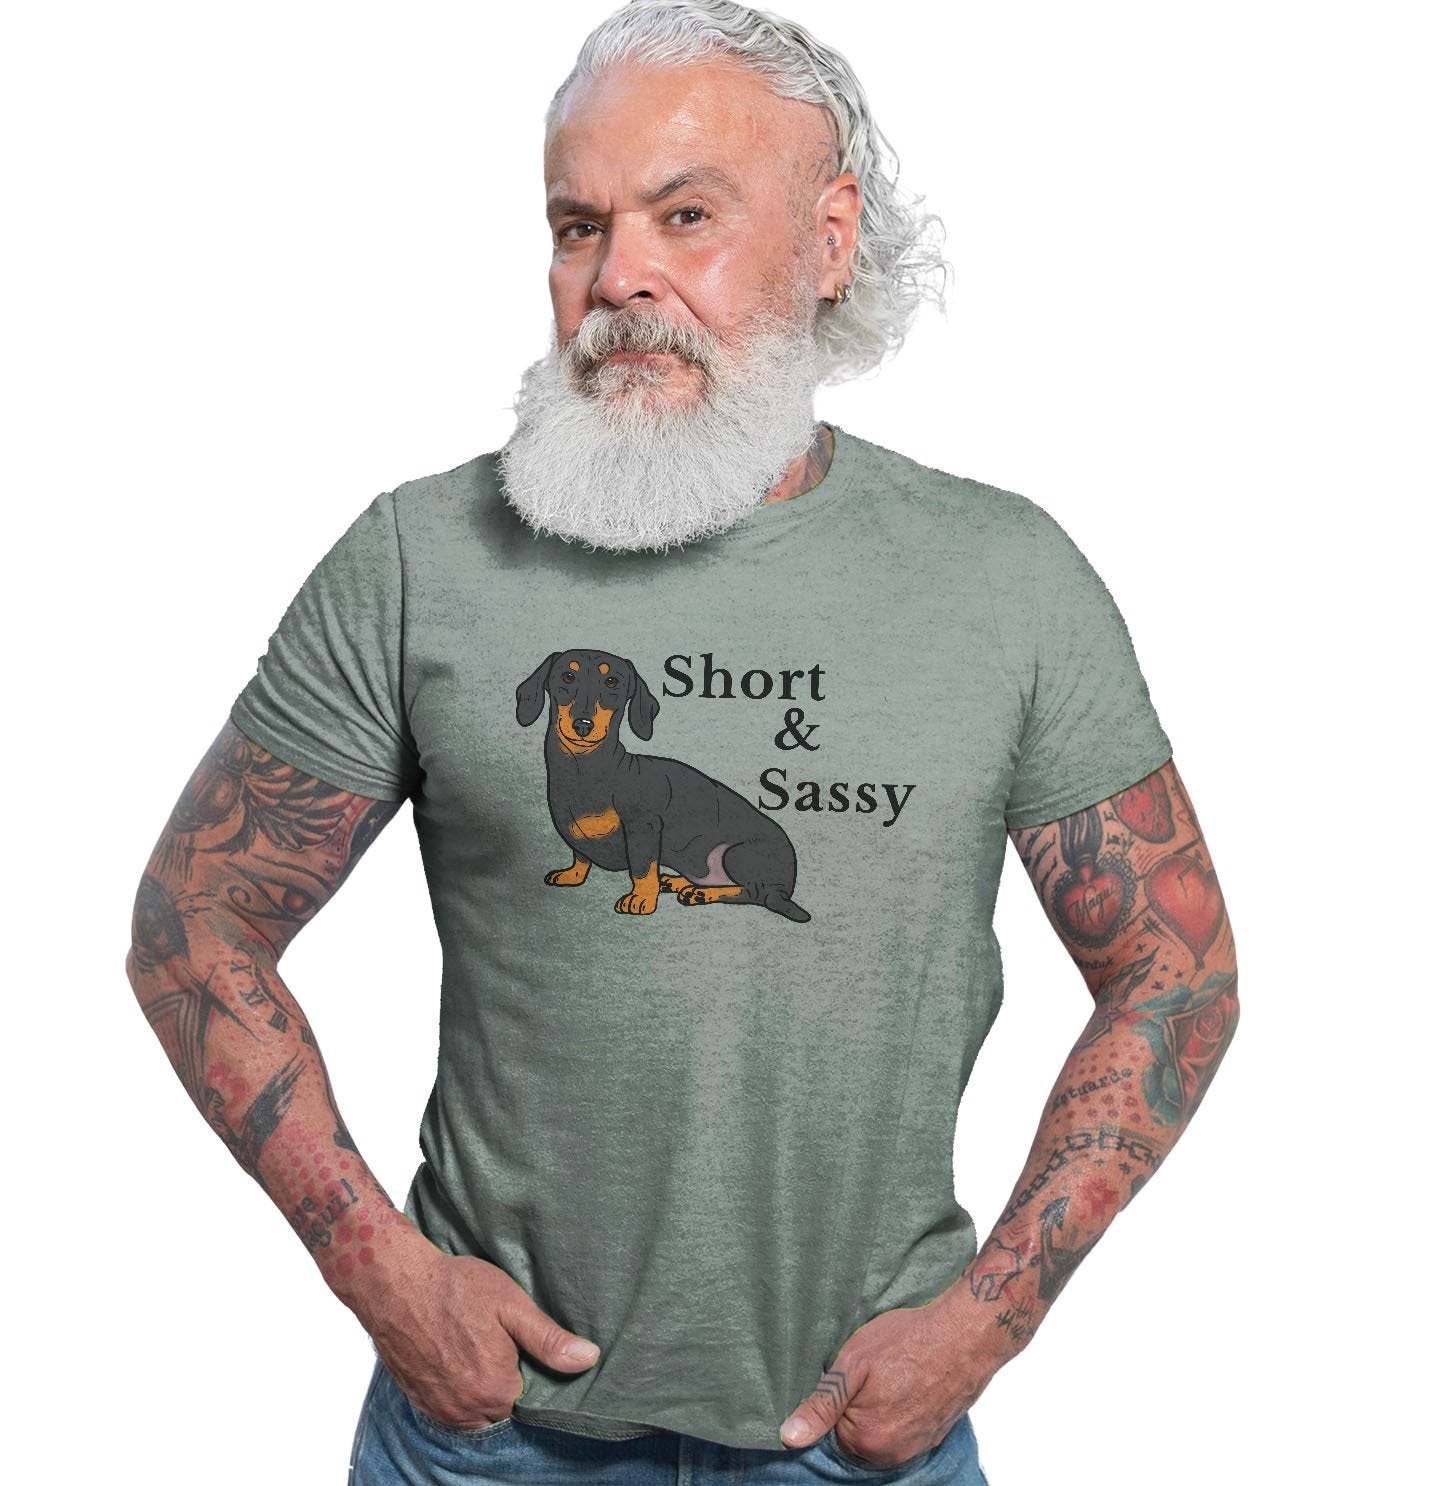 Short and Sassy - Adult Tri-Blend T-Shirt